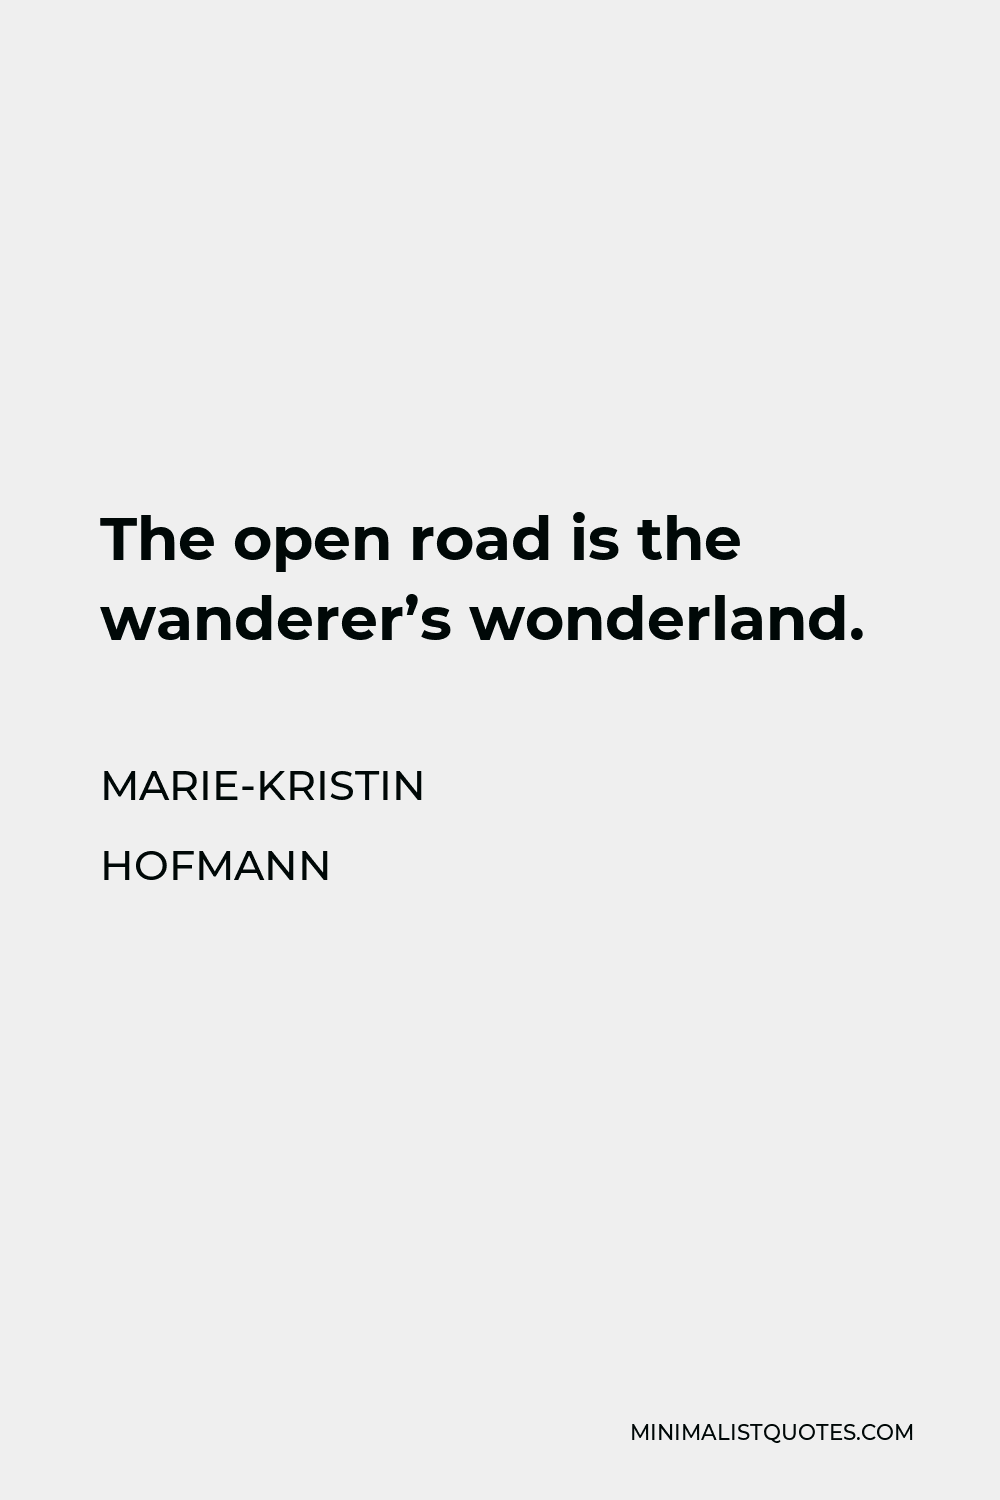 Marie-Kristin Hofmann Quote - The open road is the wanderer’s wonderland.